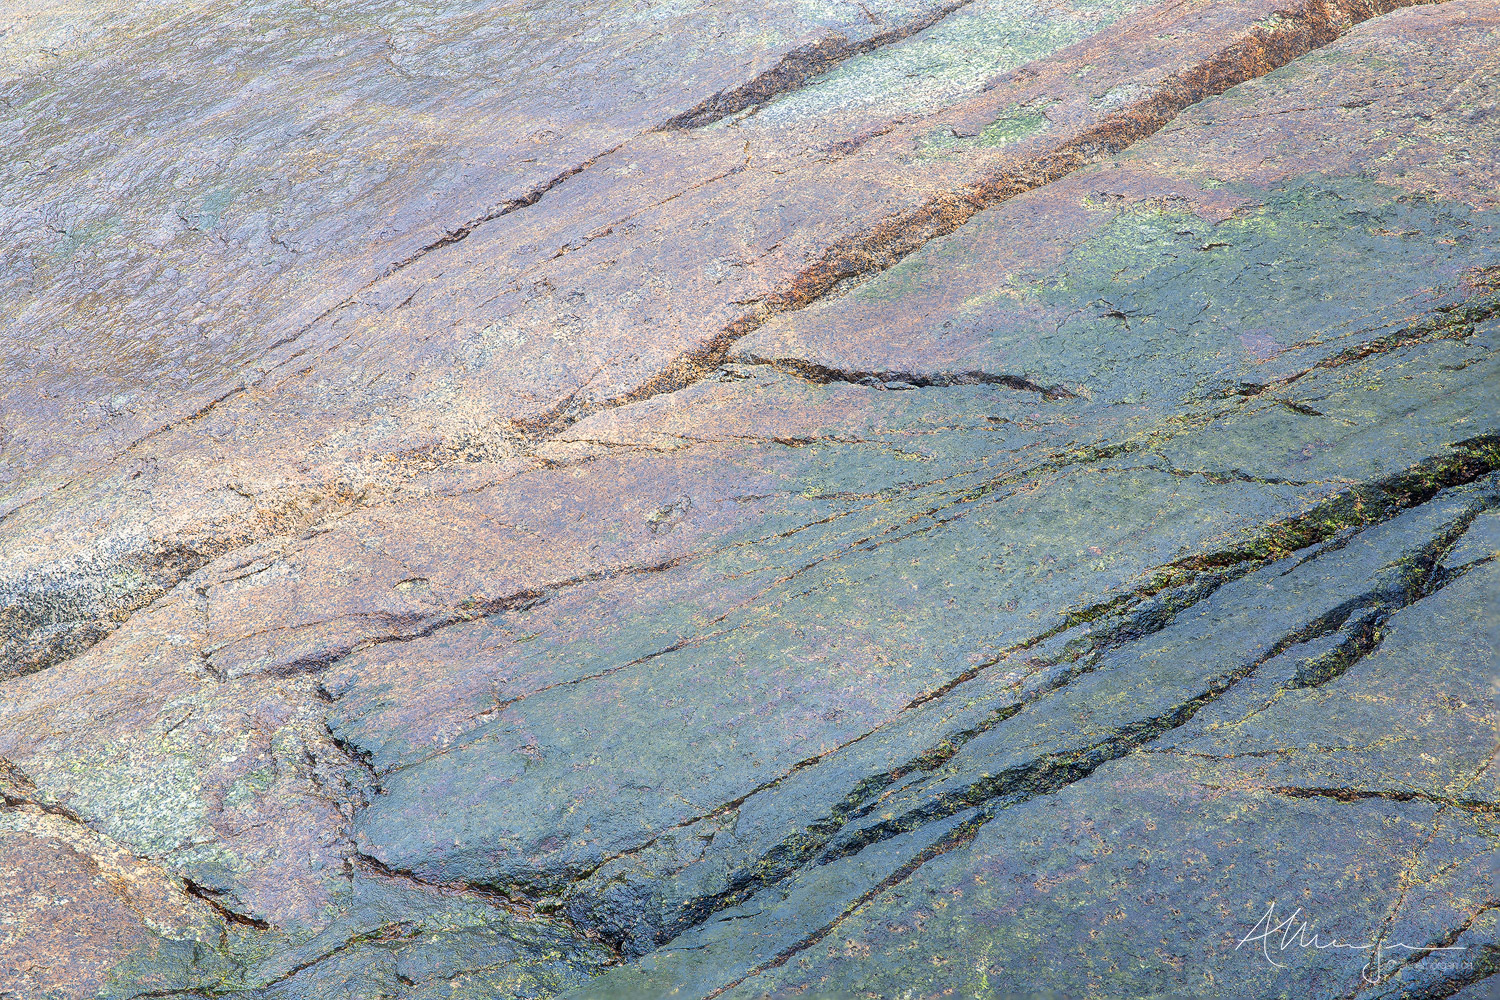 Iridescent colour on a large coastal boulder at təmtəmíxʷtən regional park.